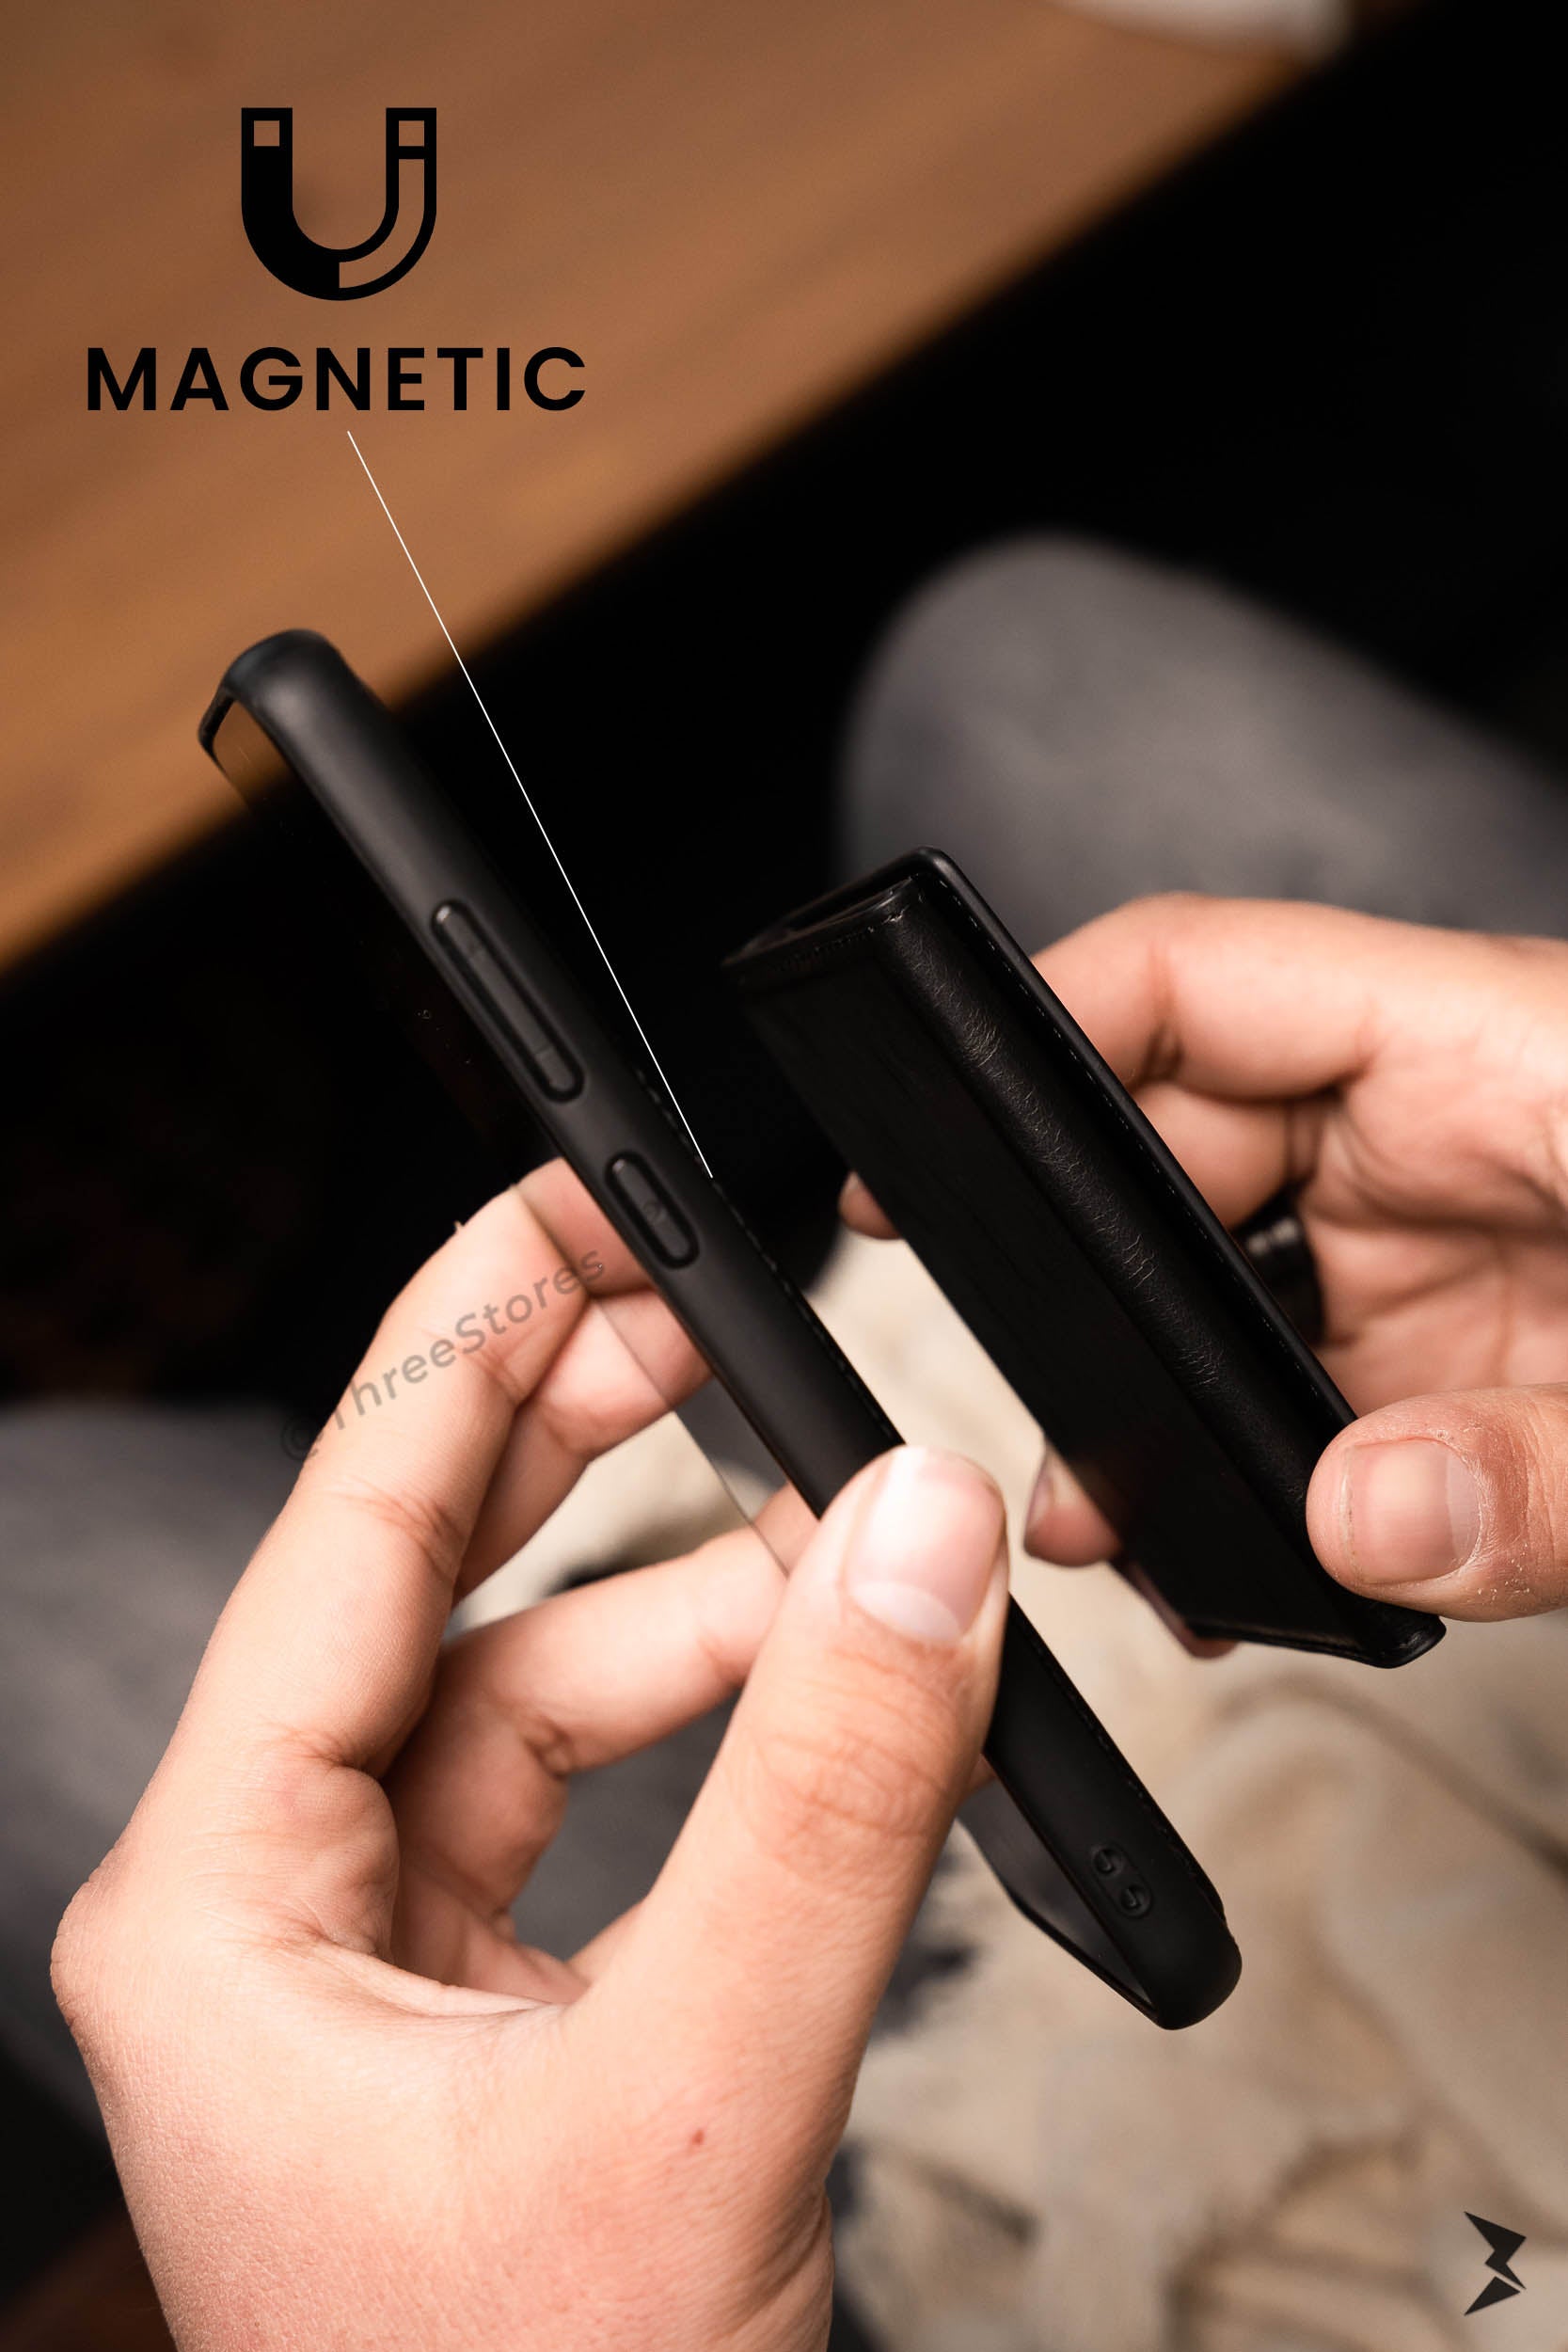 Samsung S21 Ultra Puloka Detachable card clip case